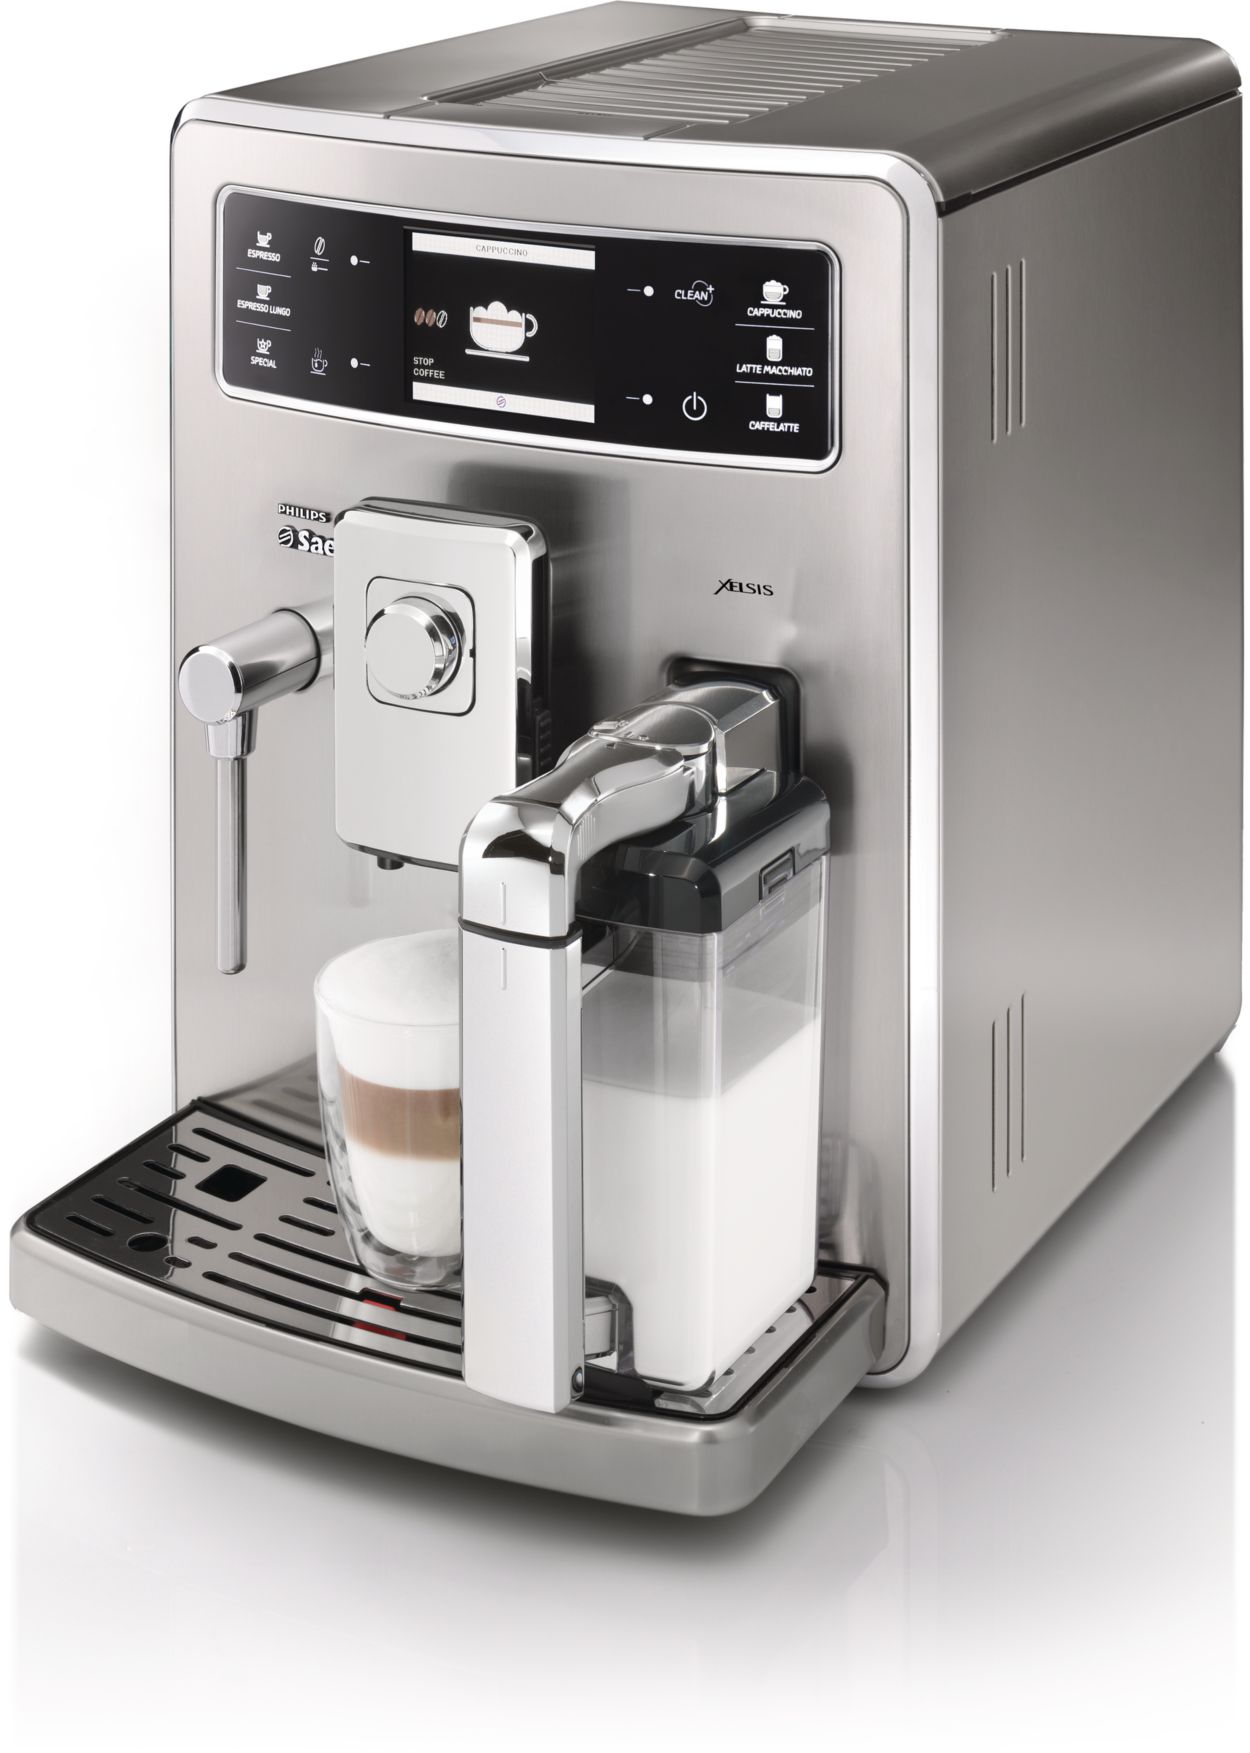 Philips coffee maker hd7450 user manual pdf